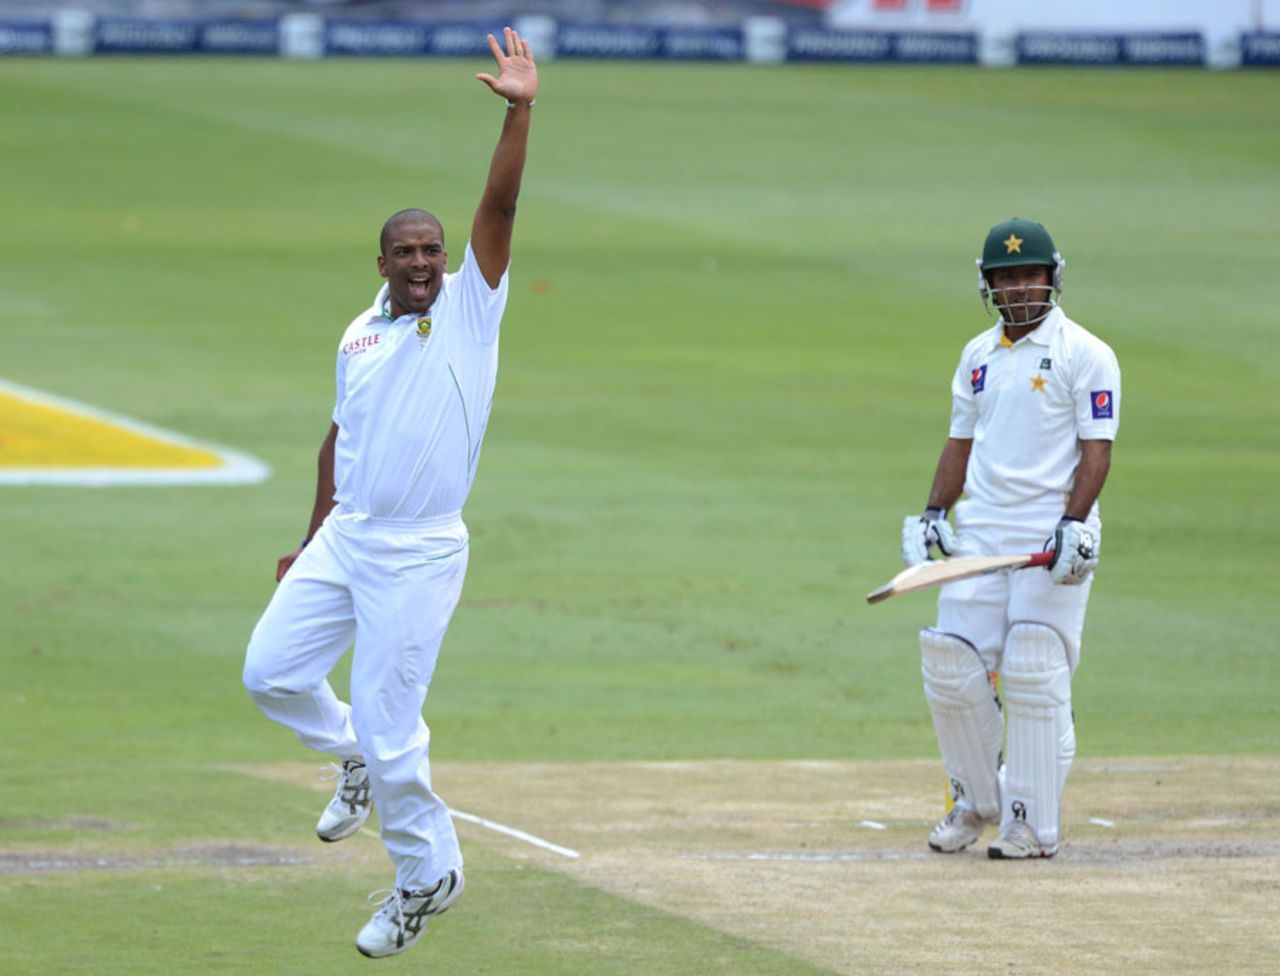 Vernon Philander had Asad Shafiq caught behind, South Africa v Pakistan, 1st Test, Johannesburg, 2nd day, February 2, 2013